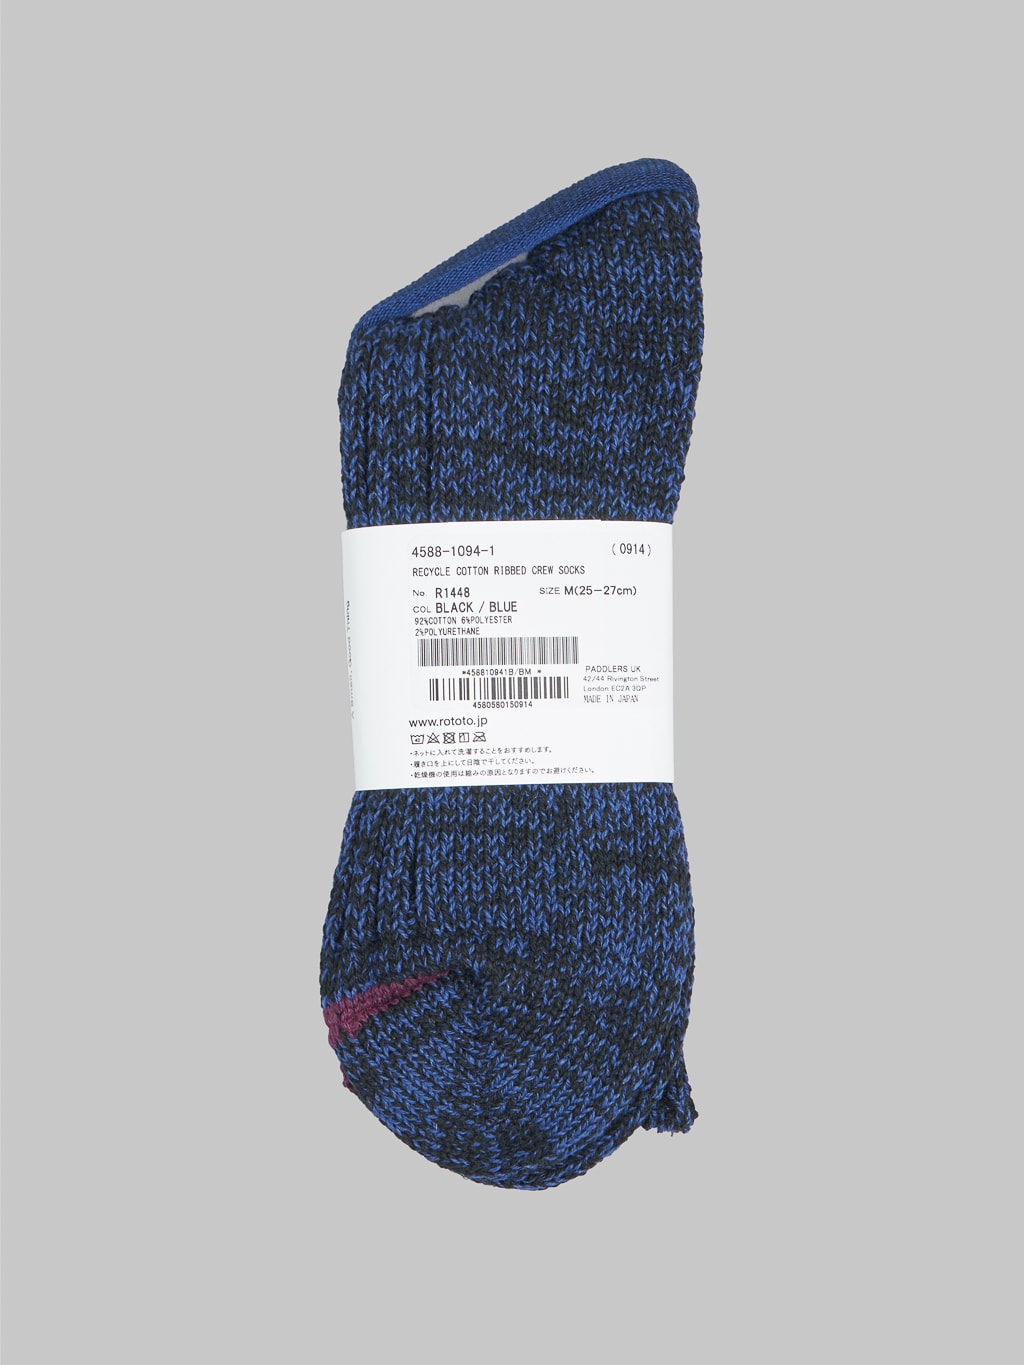 ROTOTO Recycle Cotton Ribbed Crew Socks Black/Blue